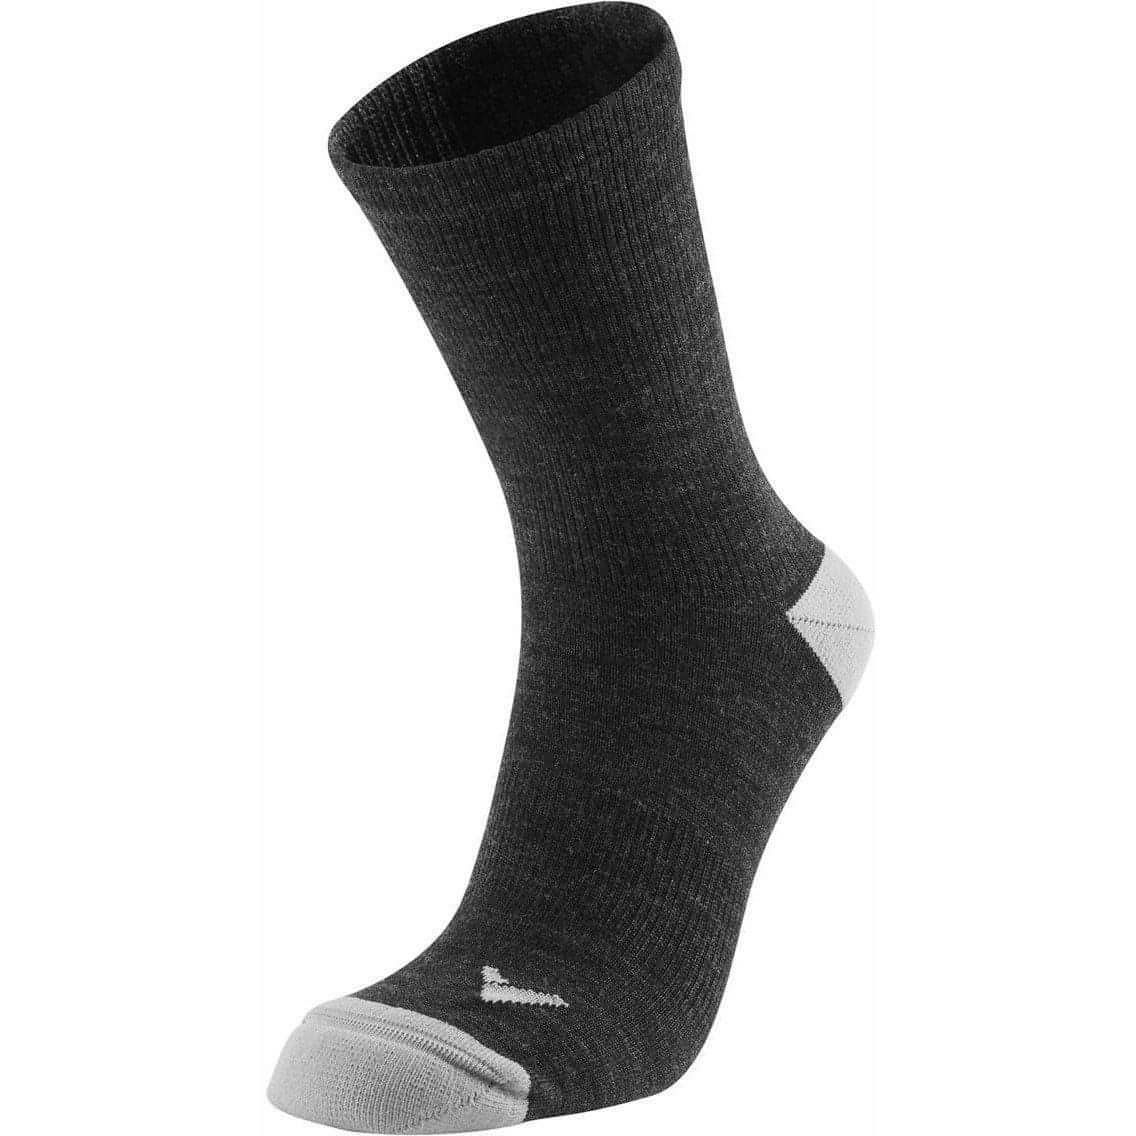 Altura Merino Cycling Socks - Black 5034948142718 - Start Fitness